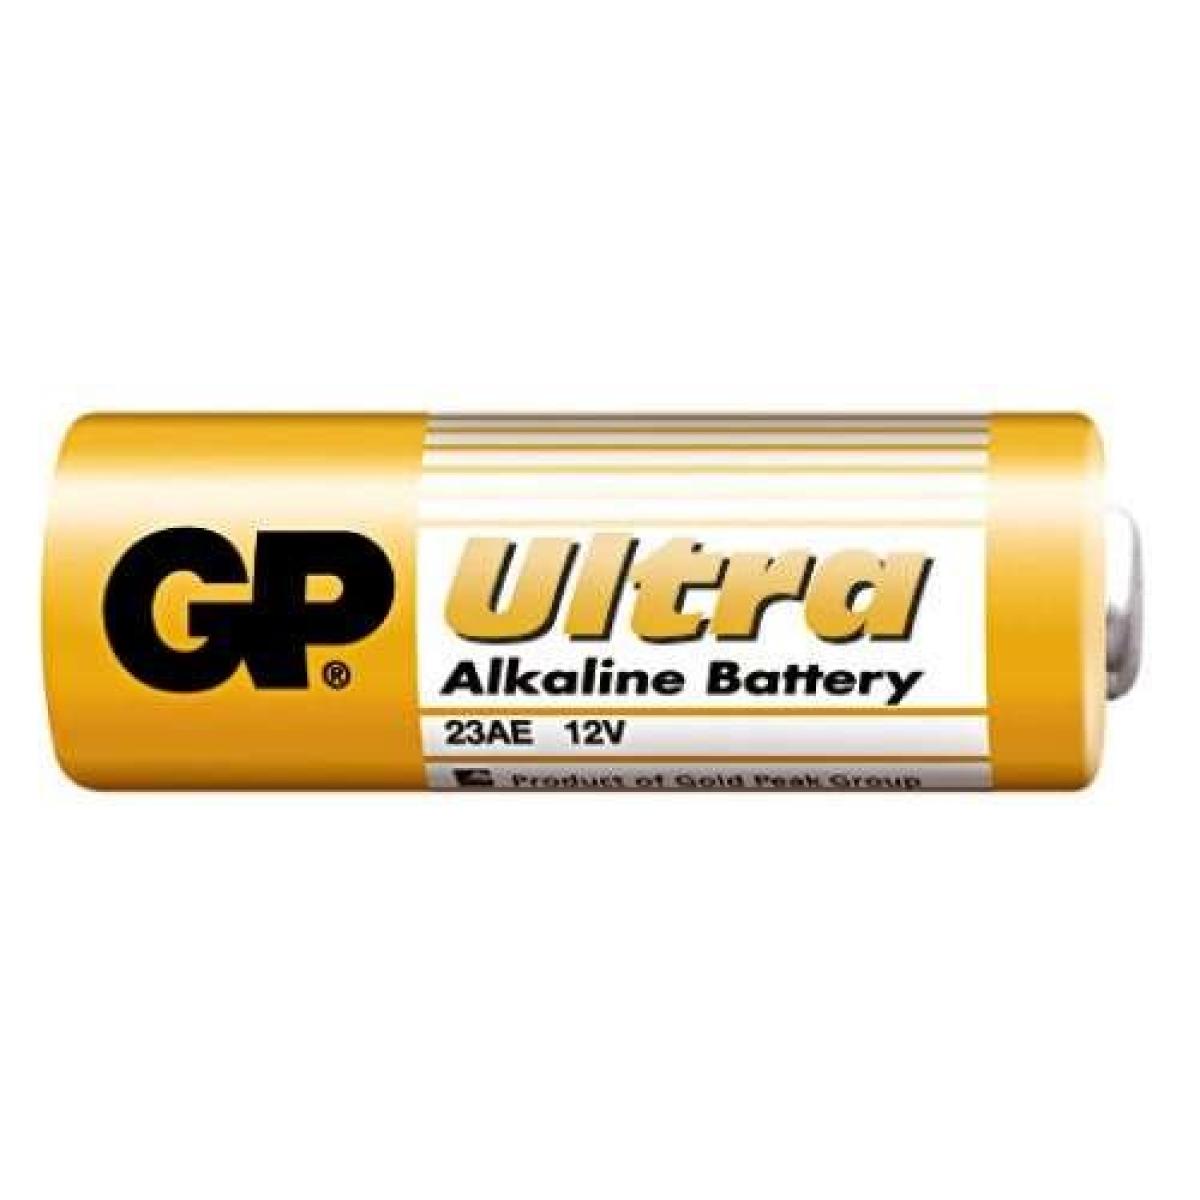 Alkaline 12v. GP Ultra Alkaline Battery 23ae 12v. Элемент питания GP Ultra 23ae 12v. Батарейка GP 23a 12v. Батарейка 23ae 12v.